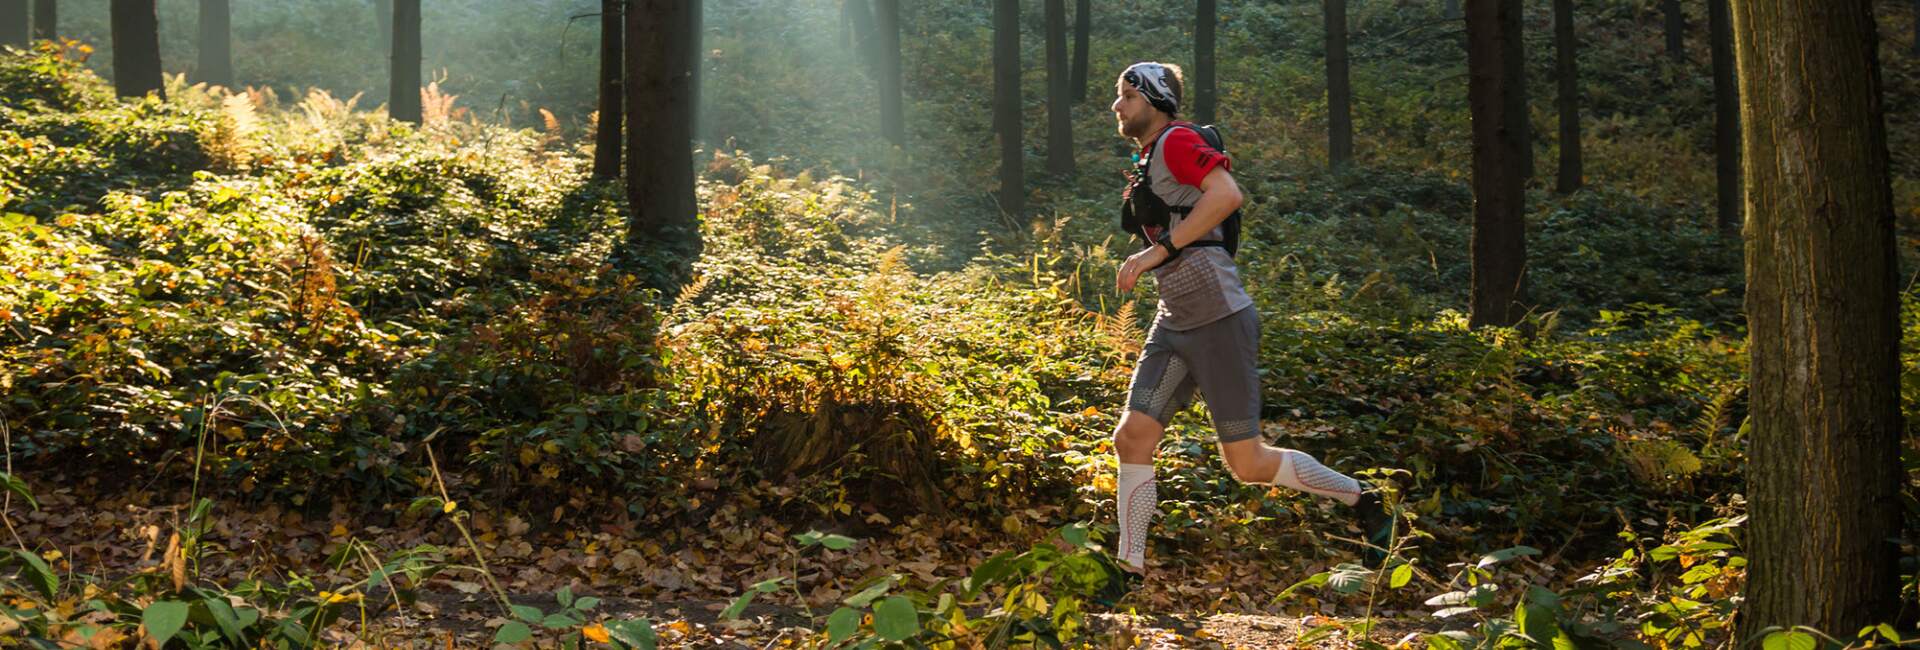 man runs on trail through forest in the autumn